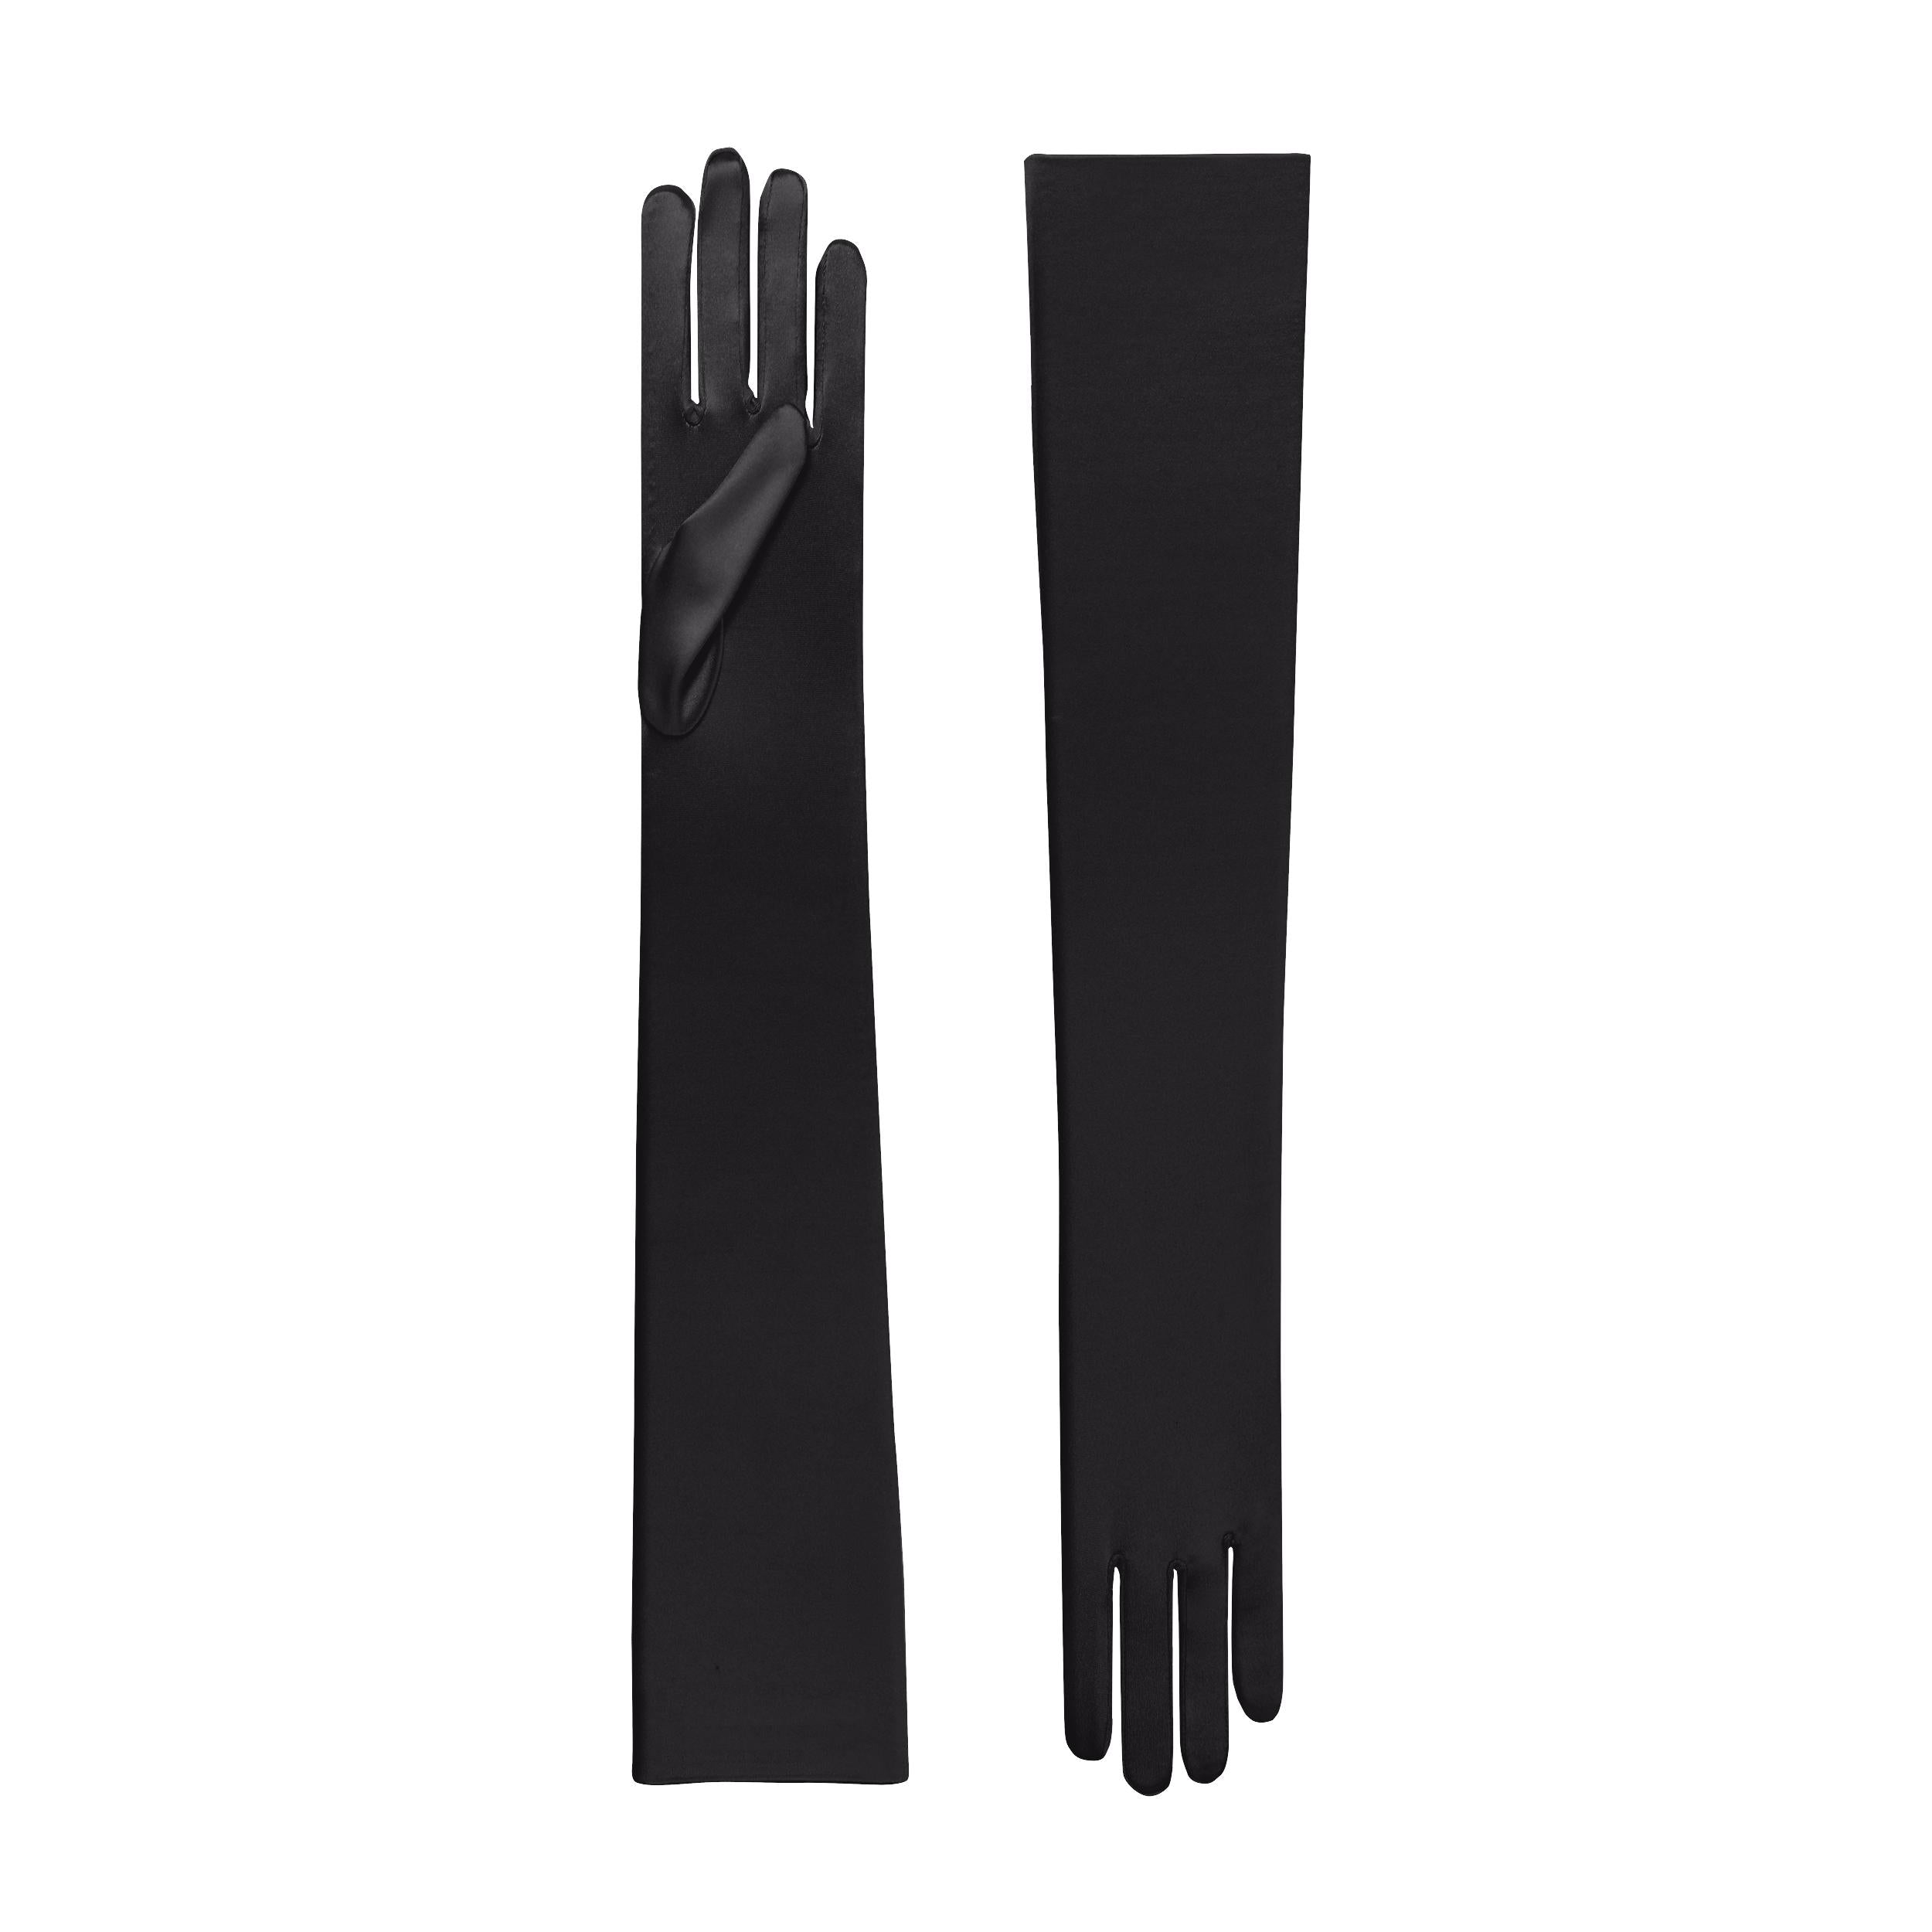 Cornelia James - Black Satin Opera Gloves - Hermione - Size Large (8½) - Made to Measure Evening Gloves by Cornelia James product